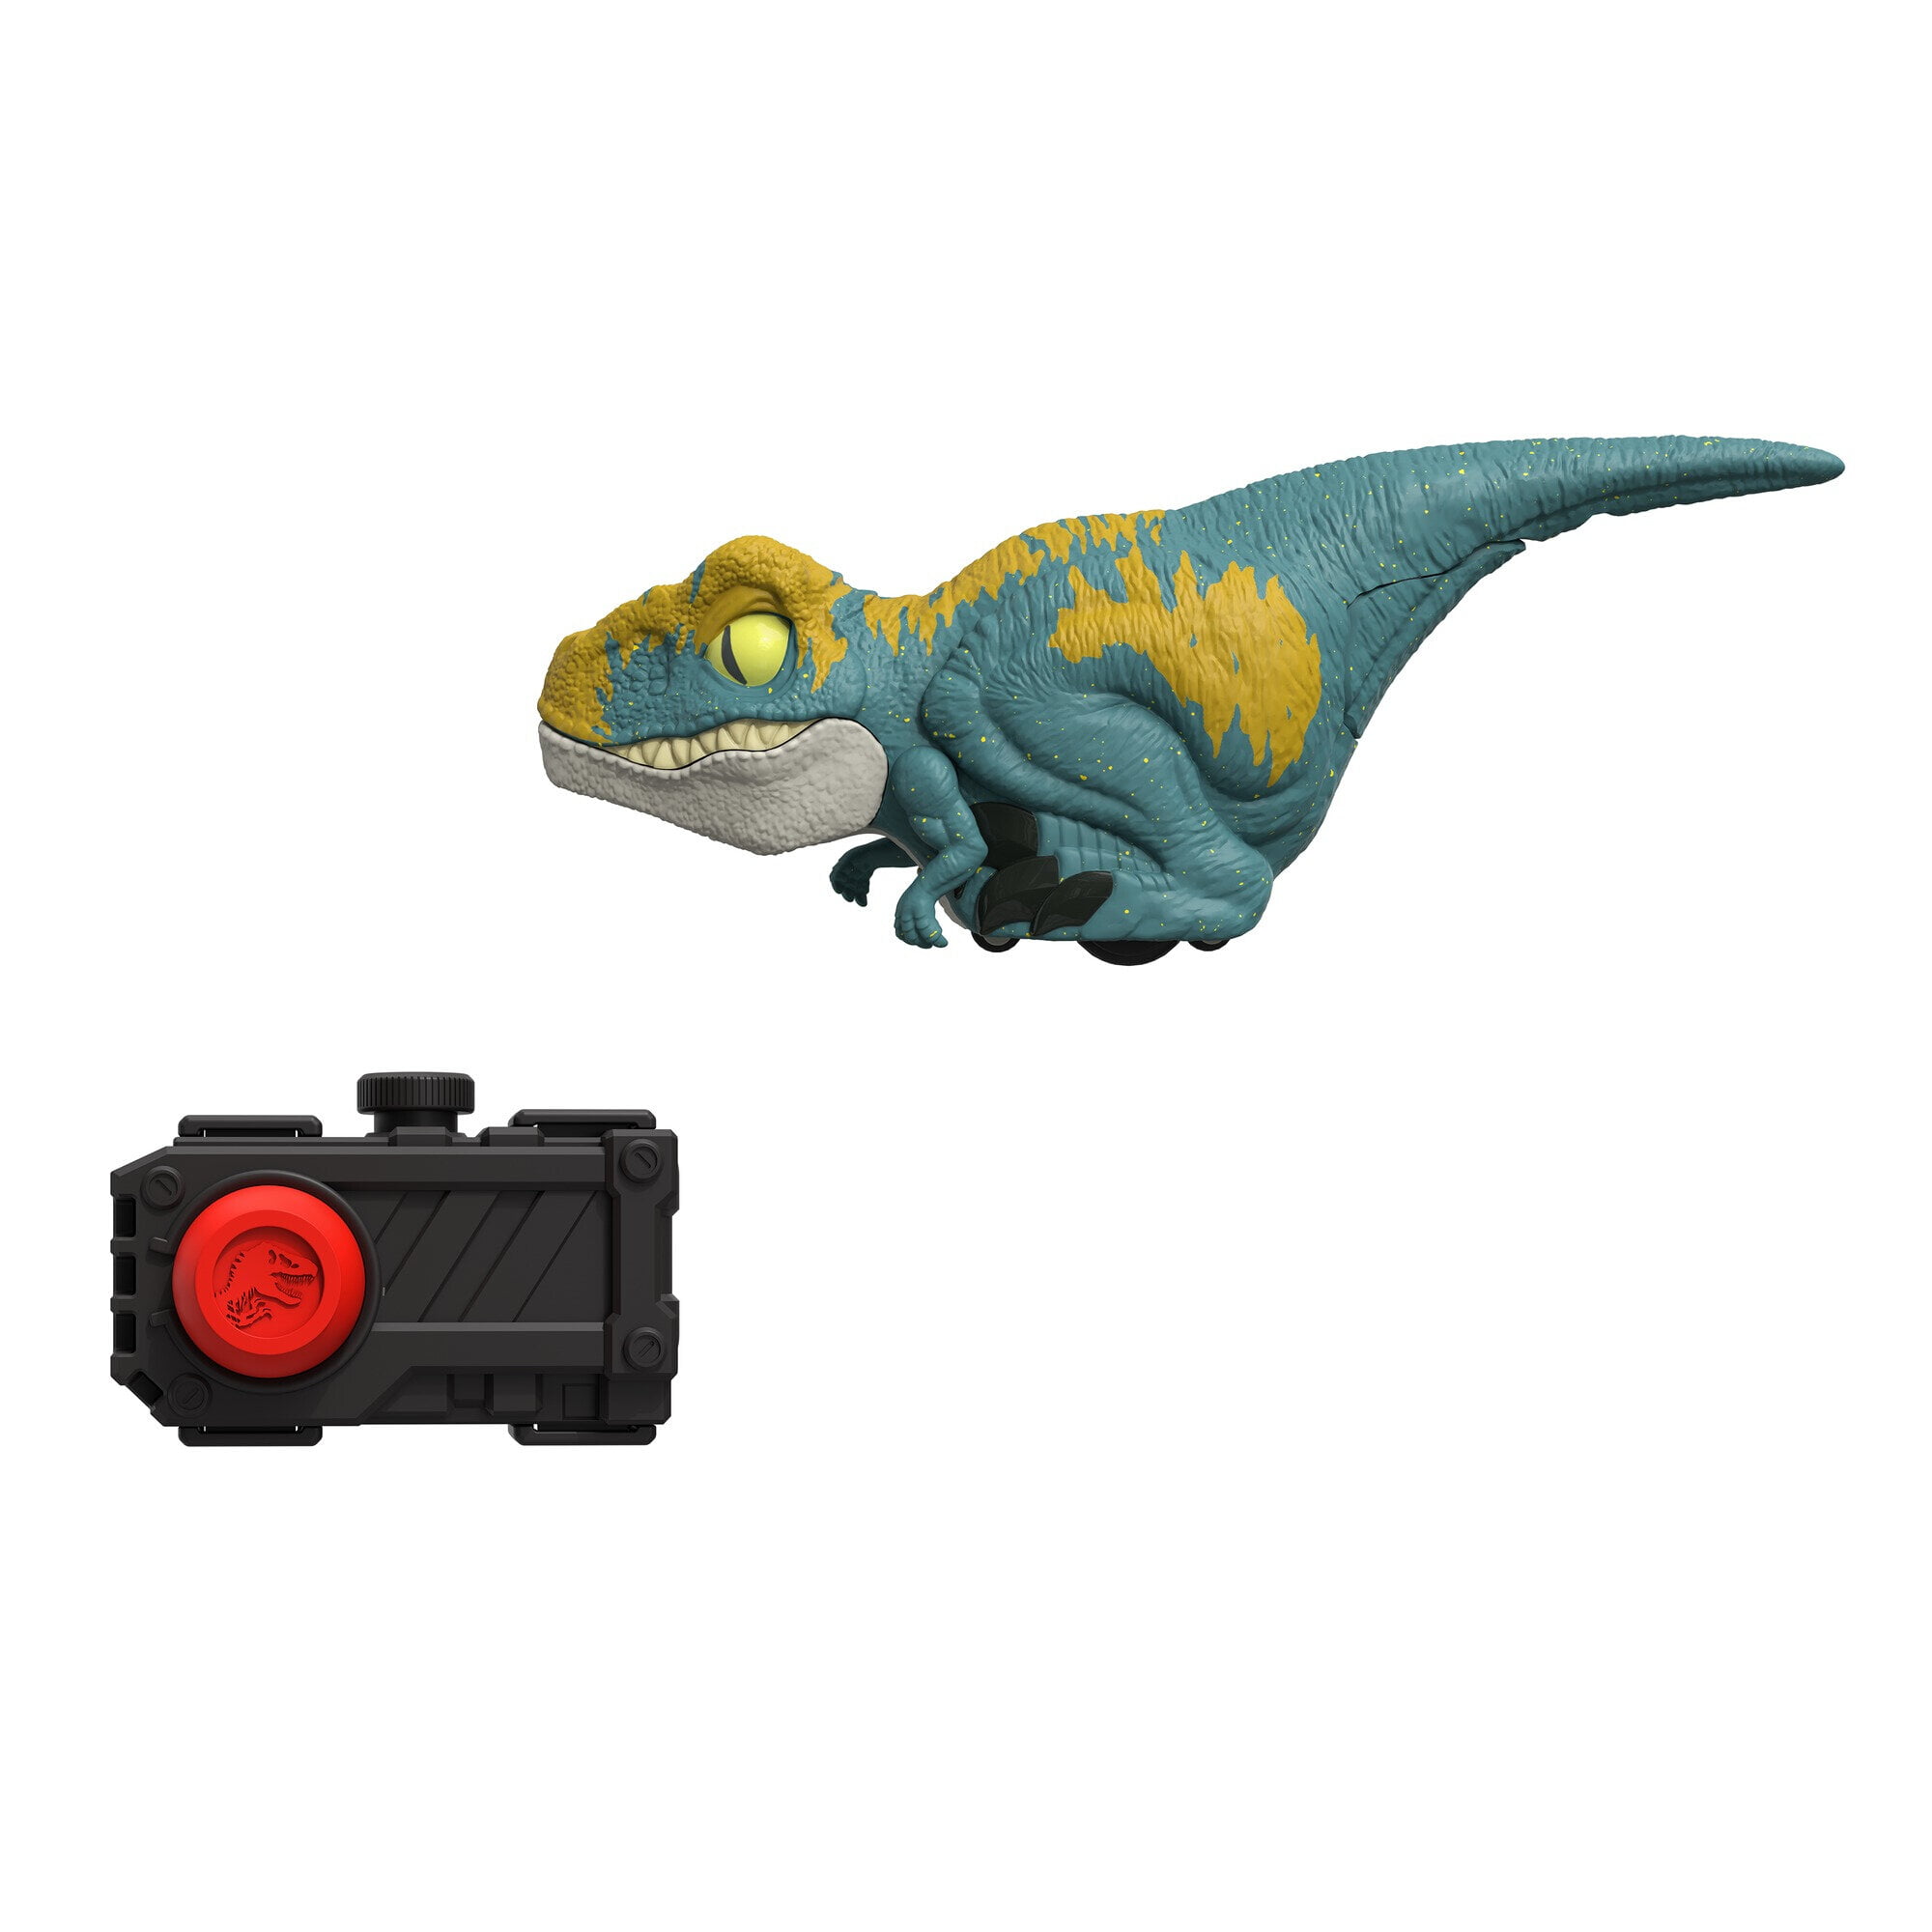 New Jurassic Blue Velociraptor Dinosaur Model Toy Home Collector Decor Kids Gift 